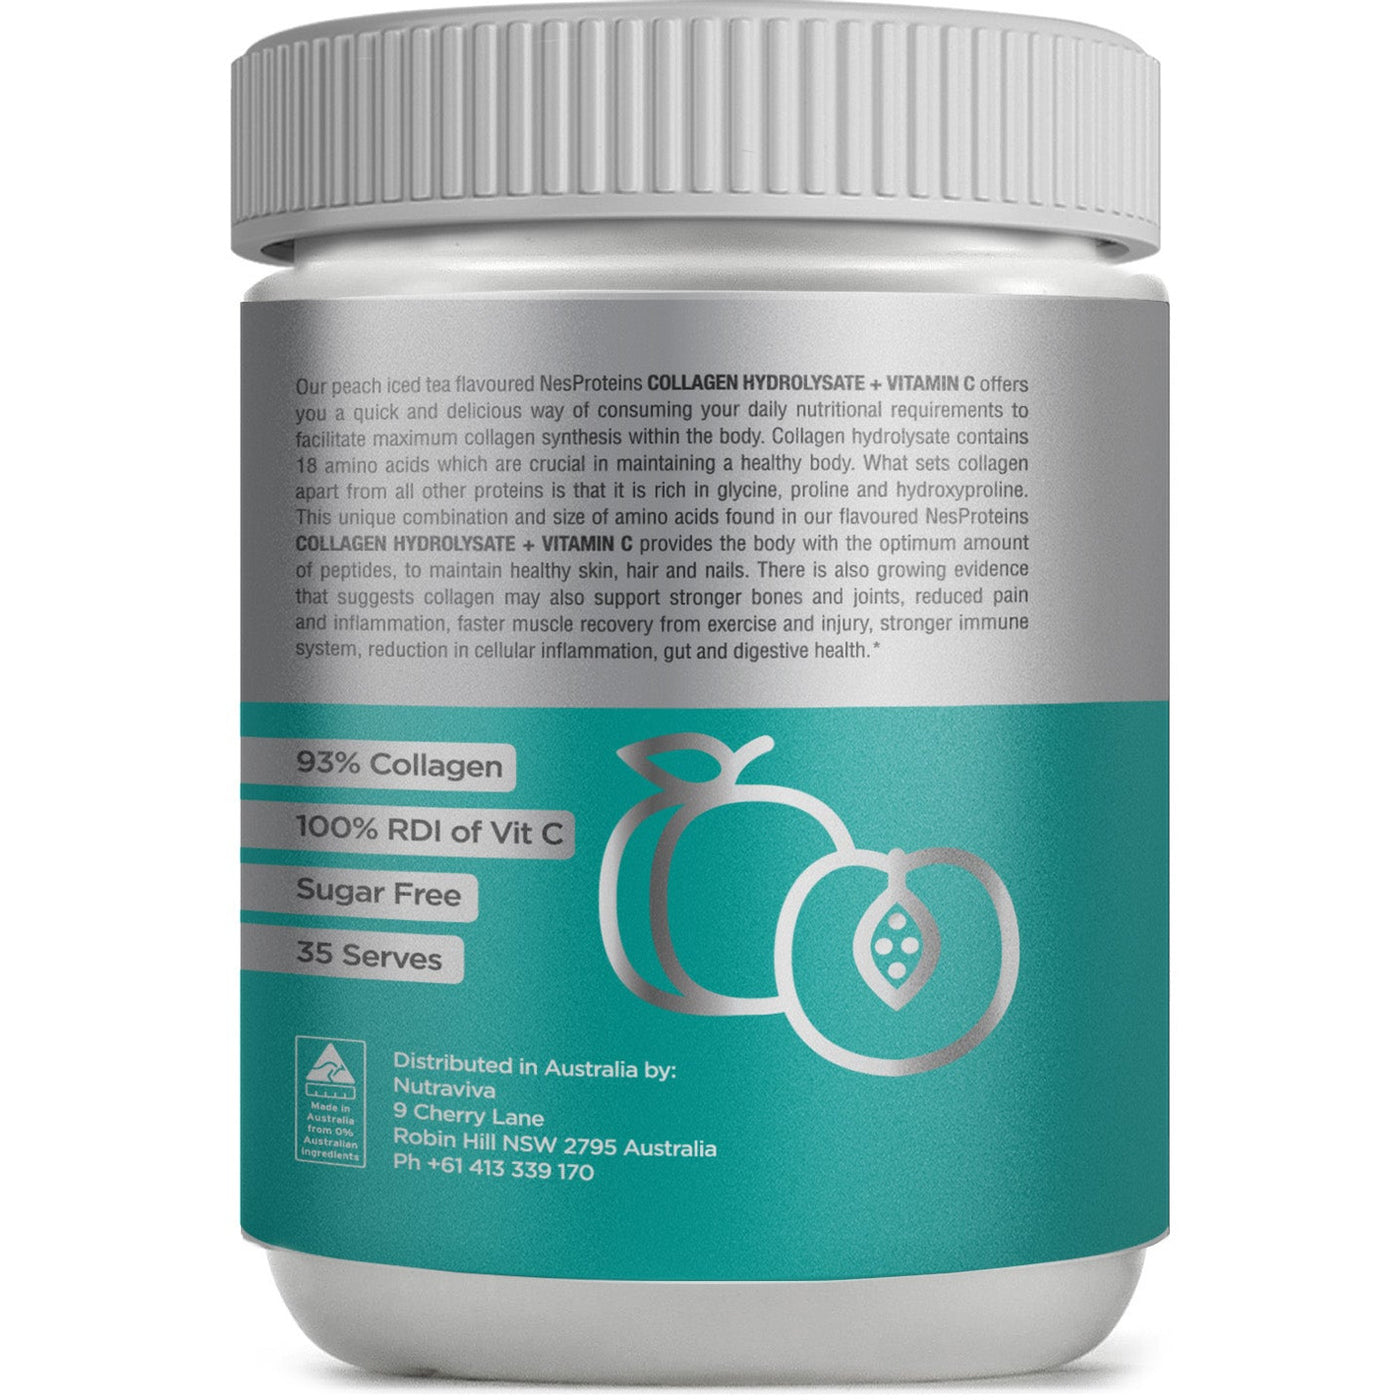 Nutraviva Collagen Hydrolysate + Vitamin C 350g Peach Iced Tea